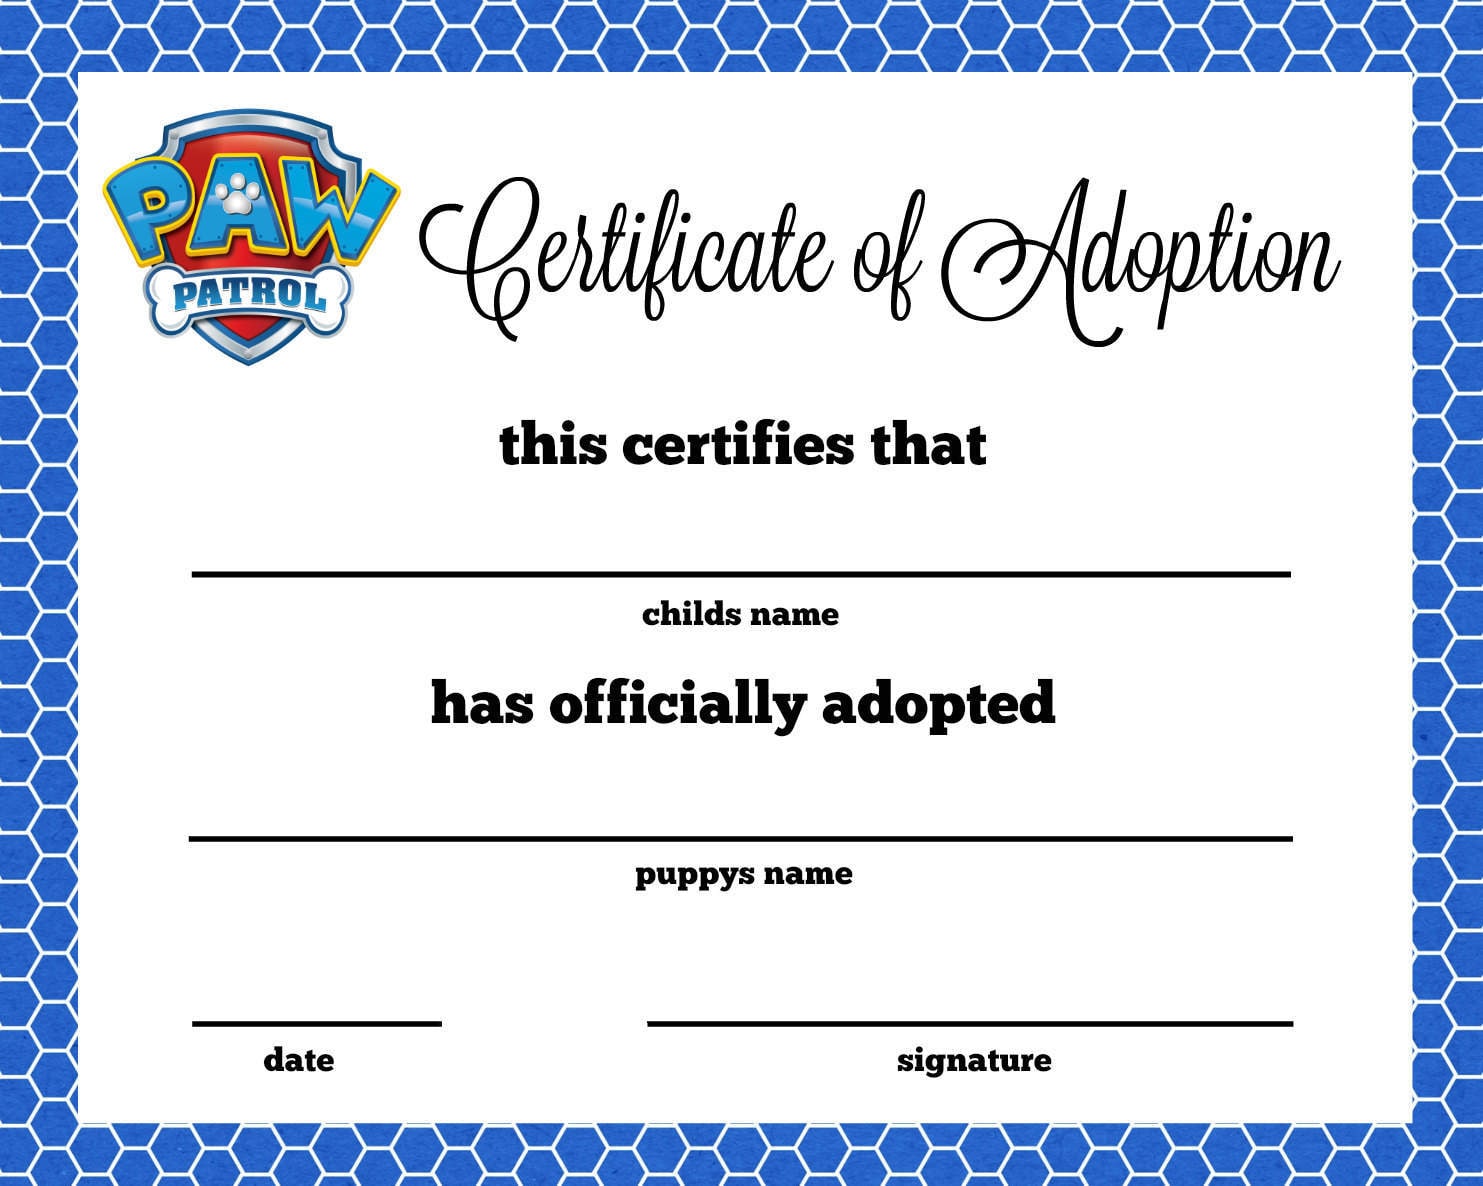 paw-patrol-puppy-adoption-certificate